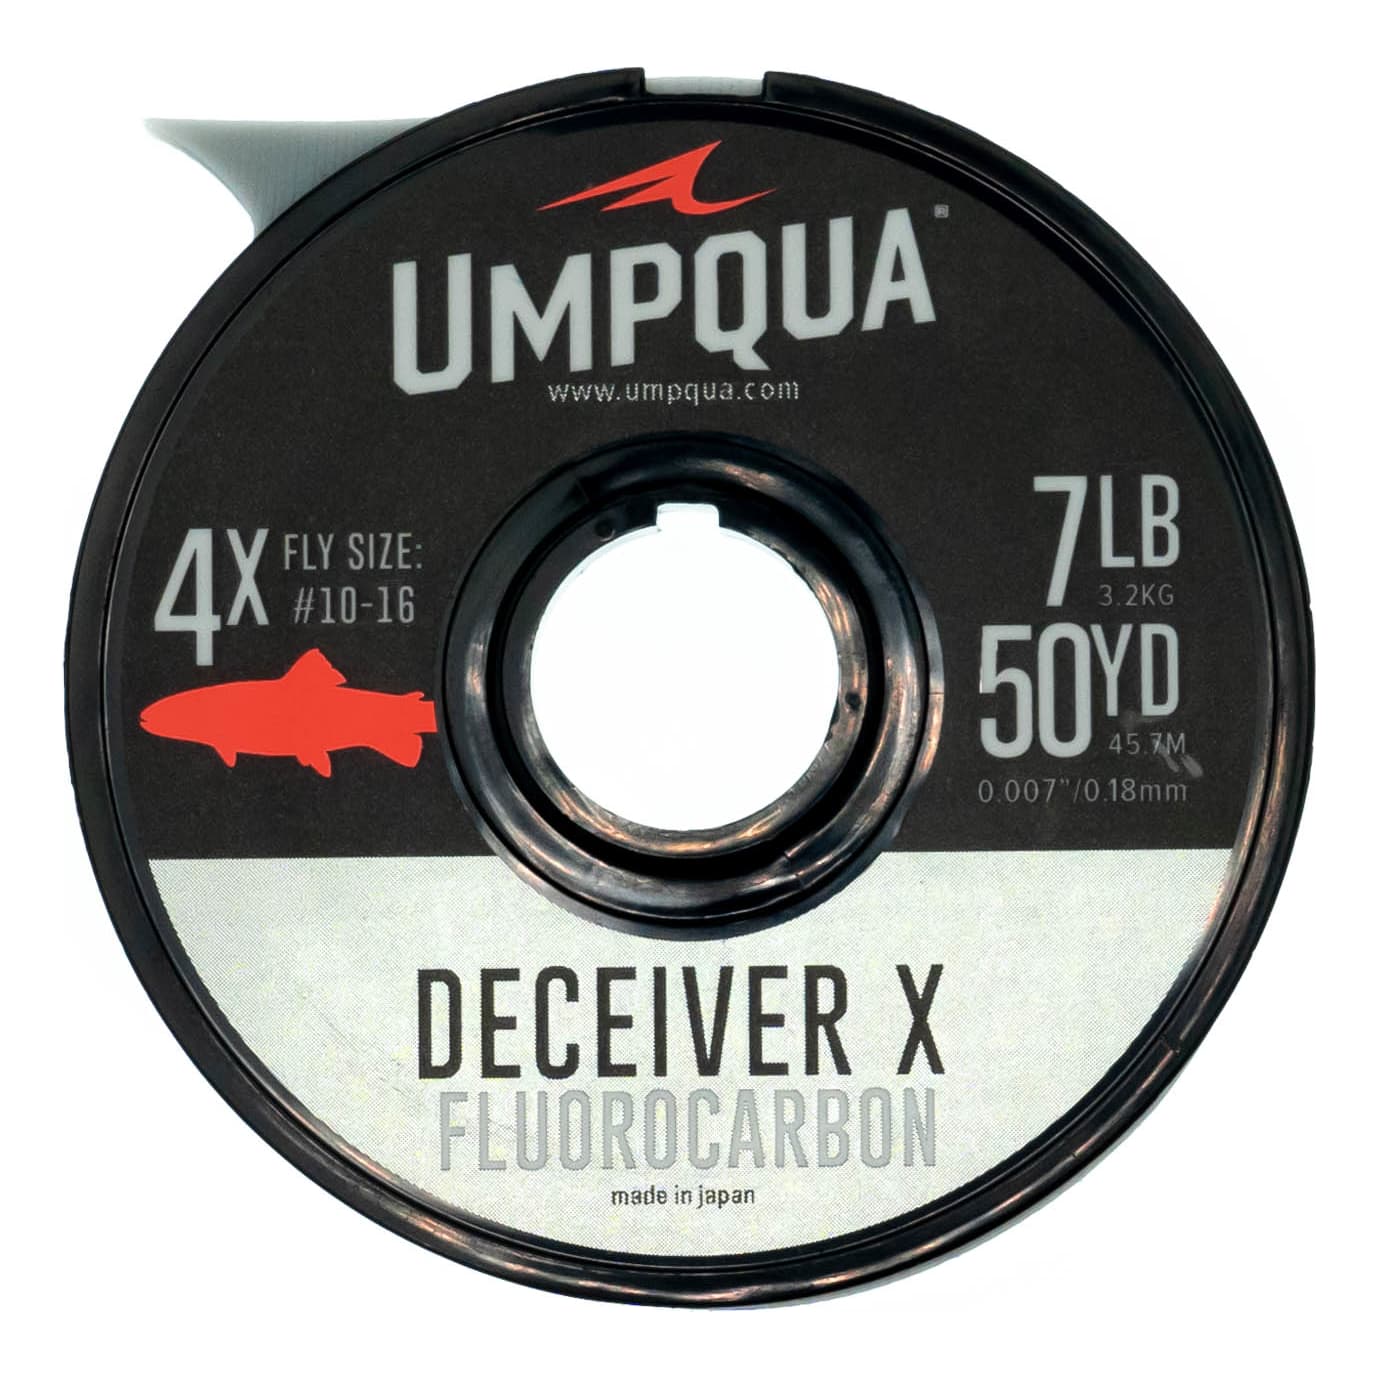 Umpqua Deceiver X FLUOROCARBON Tippet - 6X